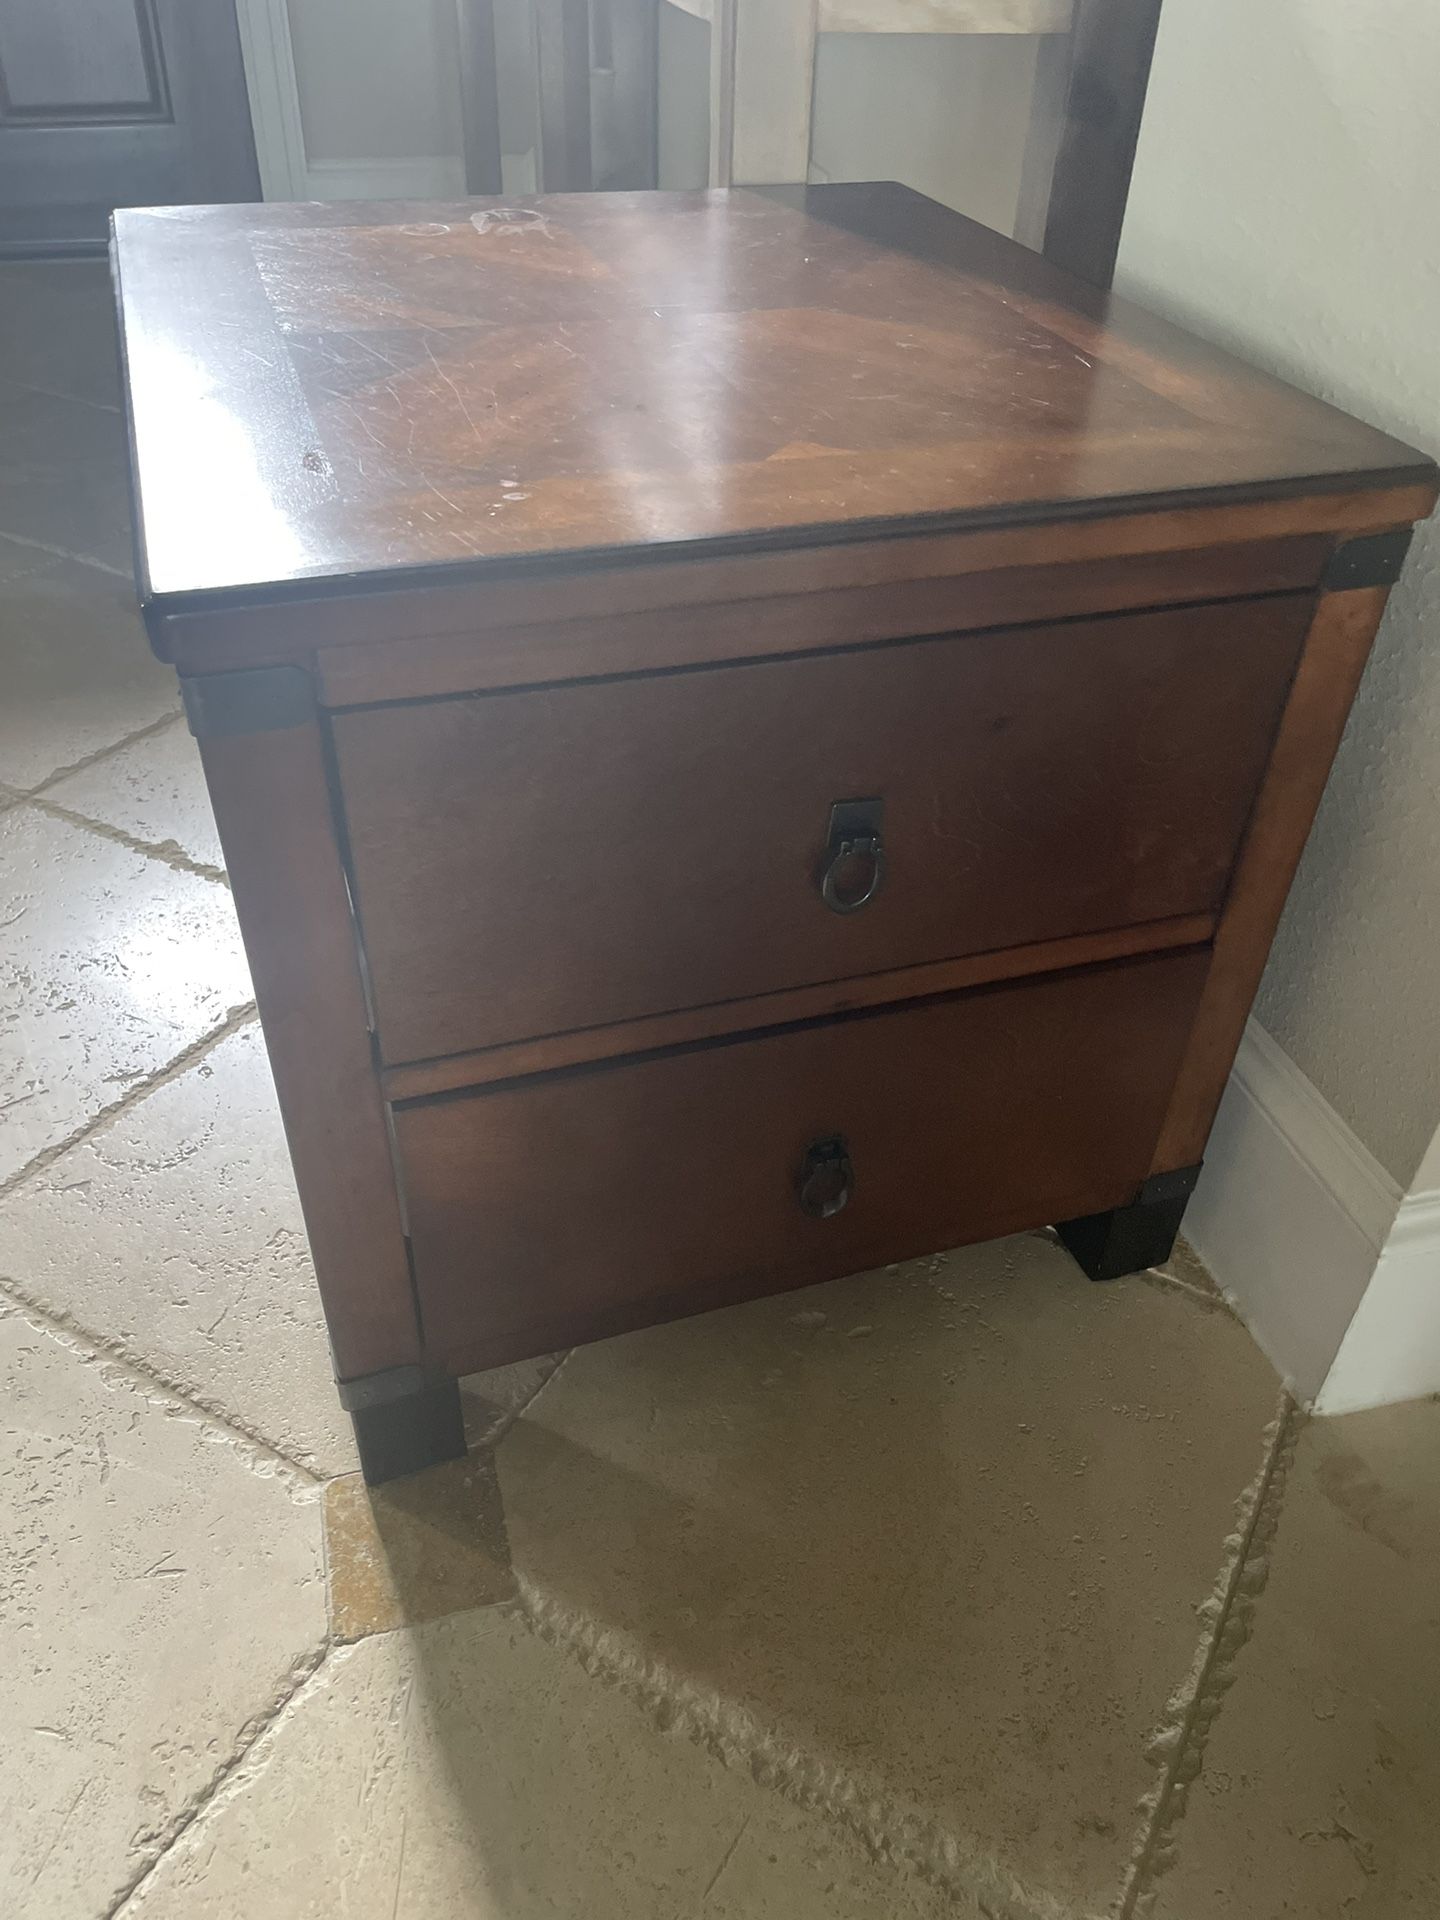 2 Corner Tables For sale 100% Wood $150